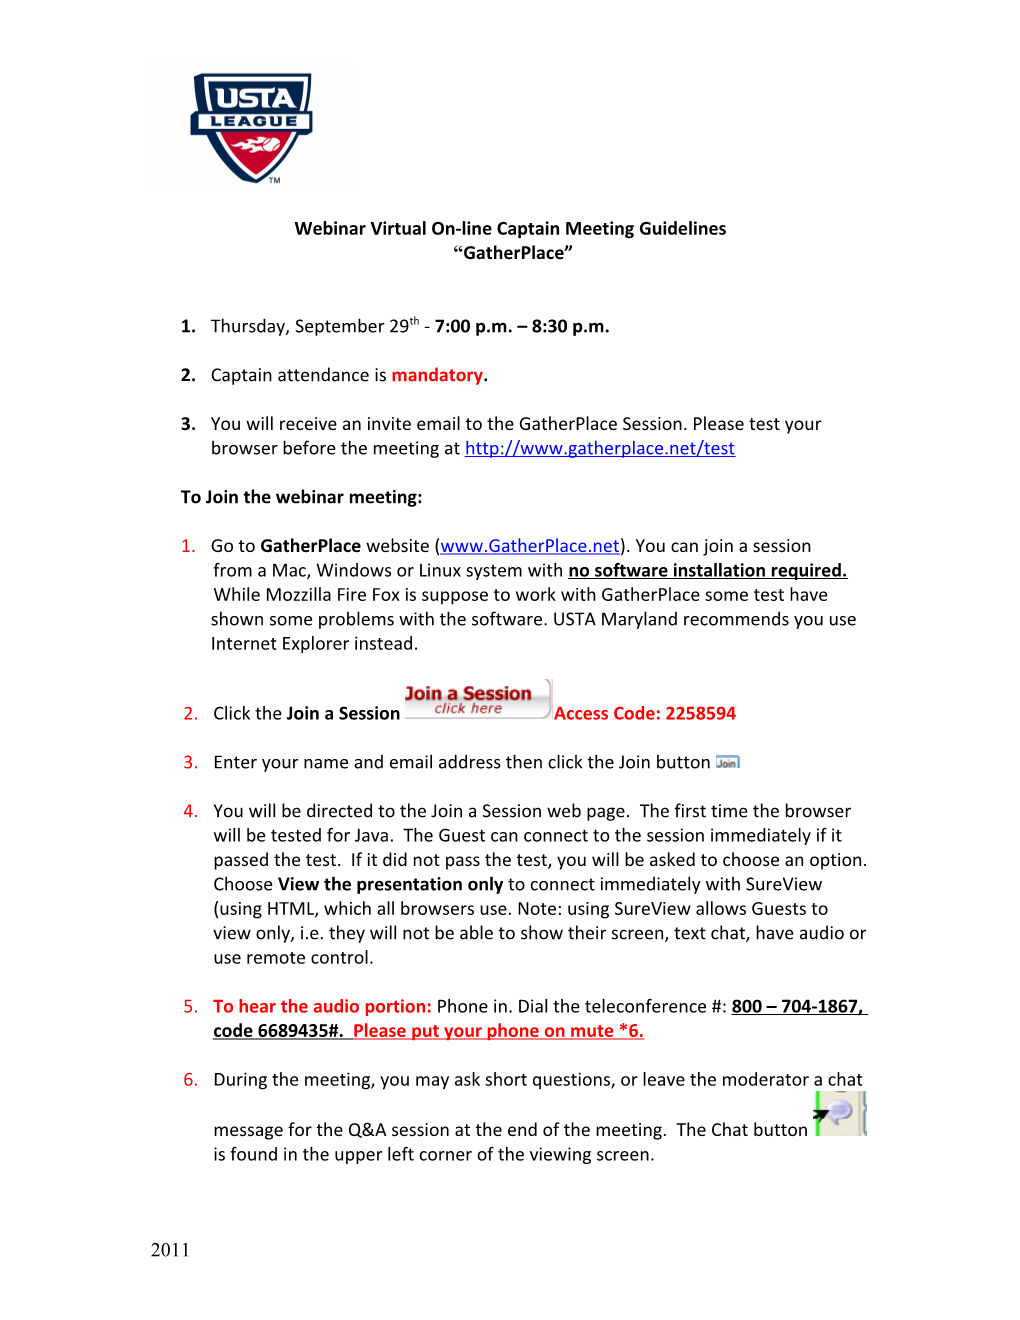 Webinar Virtual On-Line Captain Meeting Guidelines